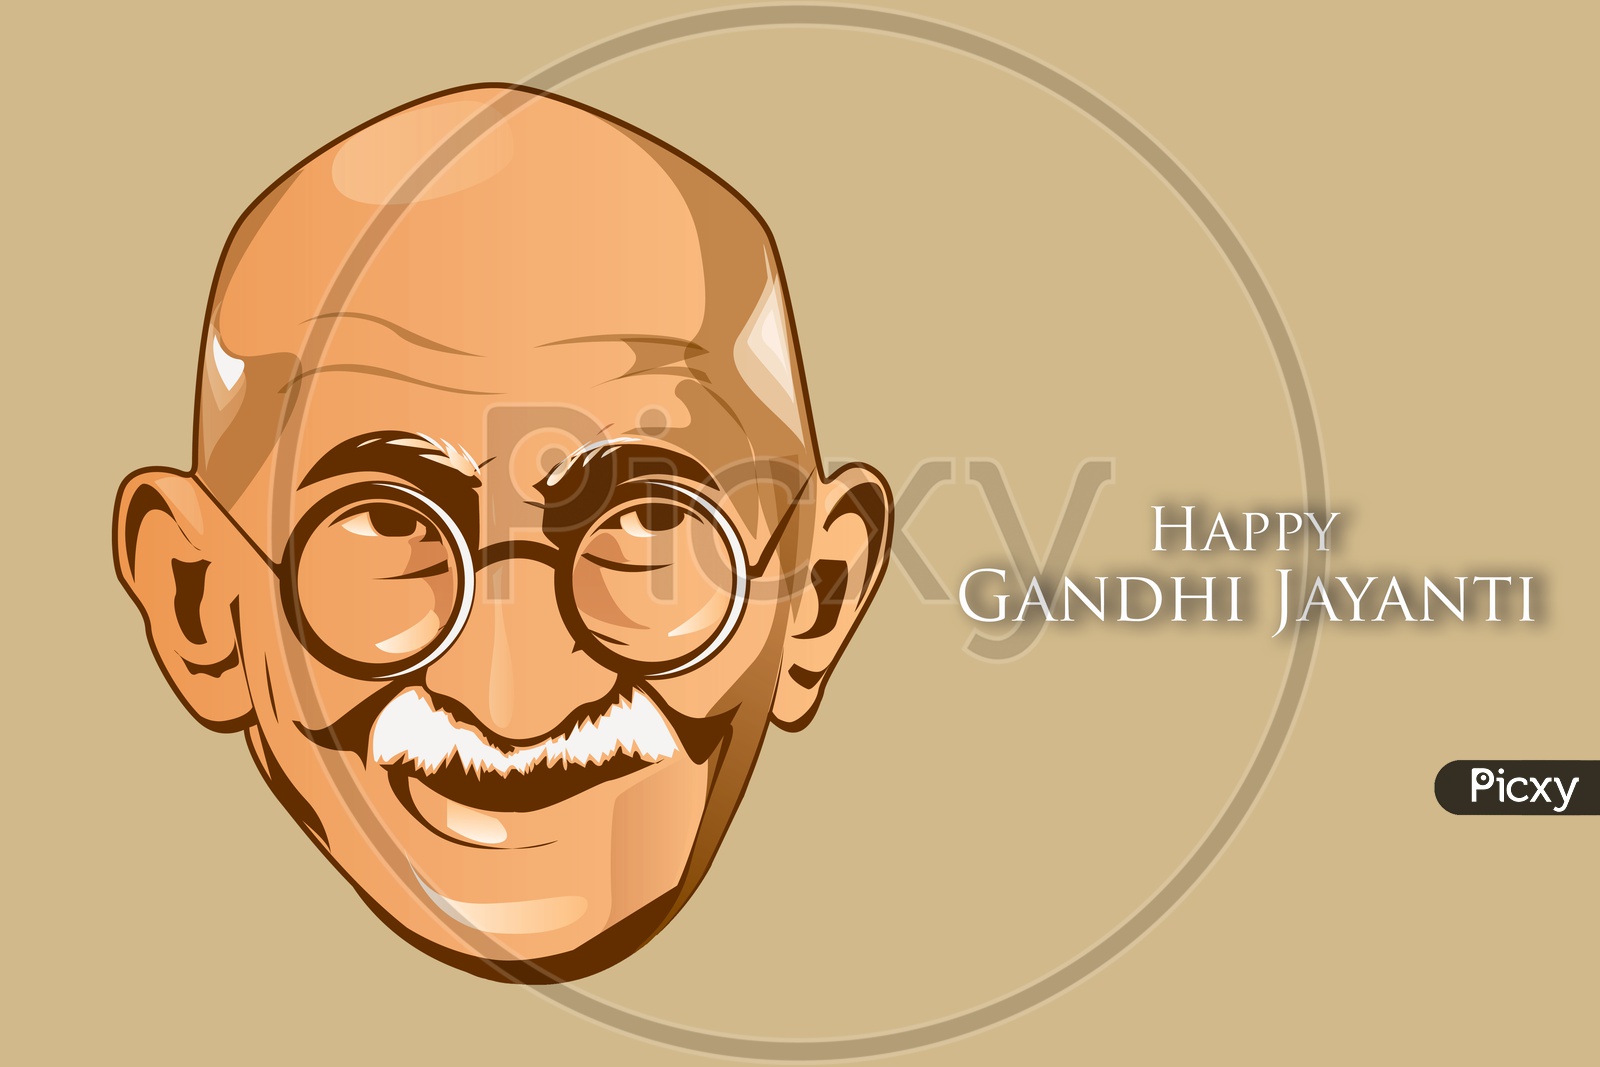 Happy Gandhi Jayanti  wishes on 2nd October on the eve of  Mohandas Karamchand Gandhi Birthday in India